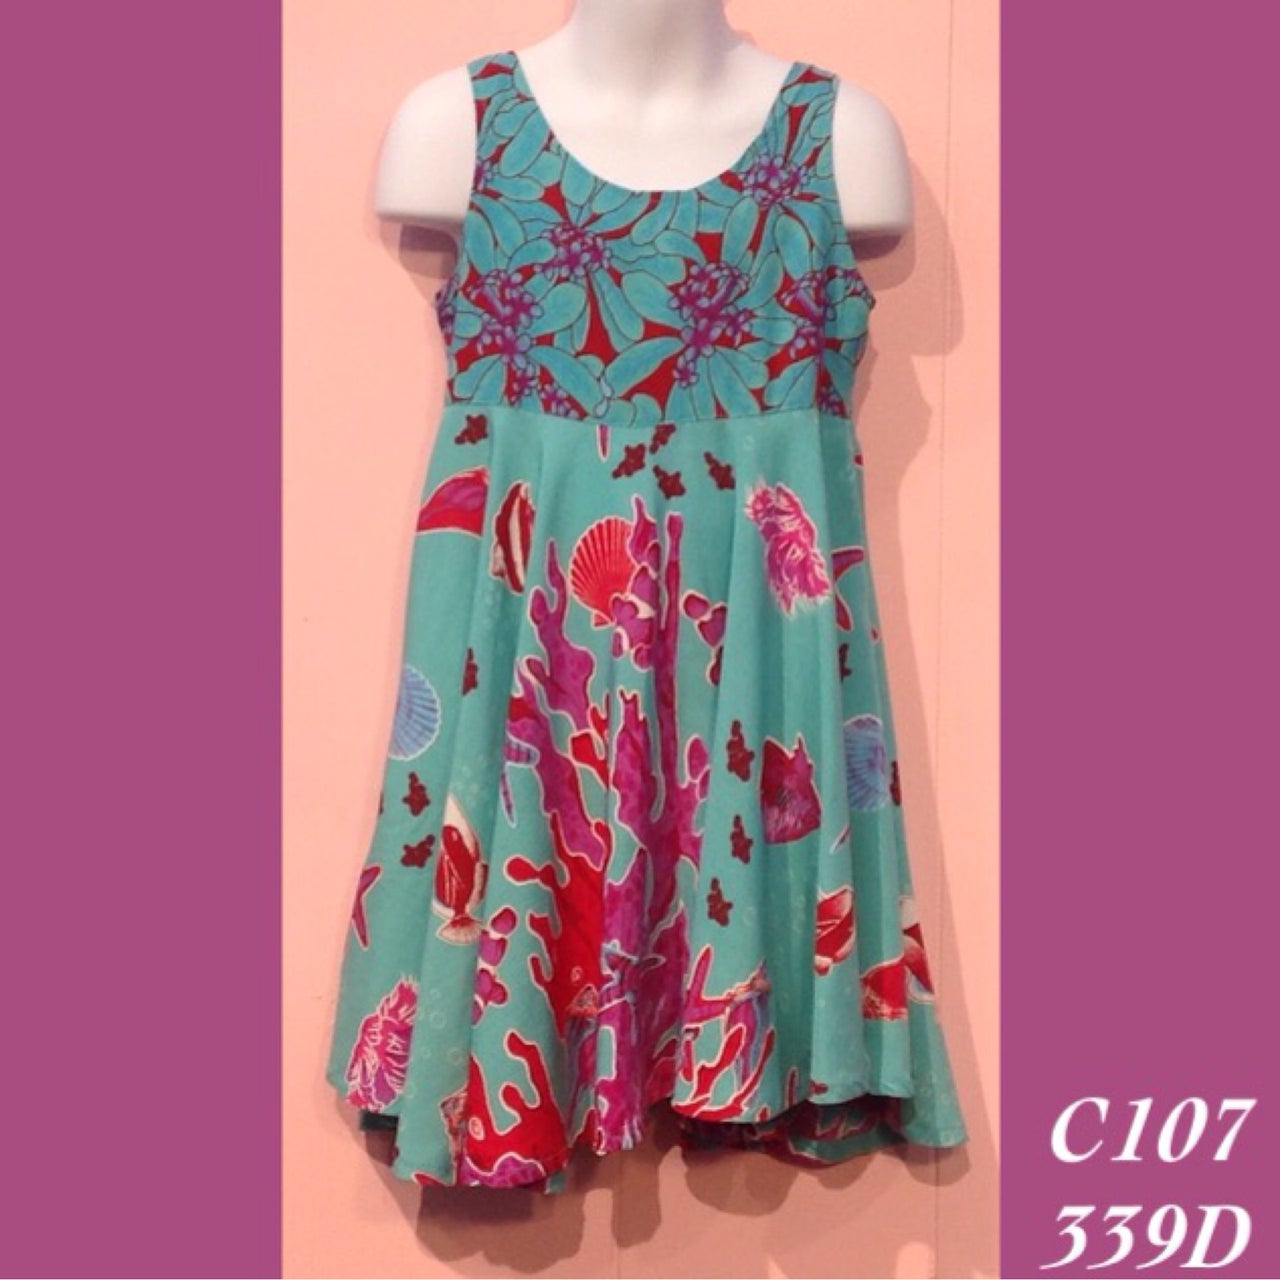 C107 - 339D , Tie Back Circle Dress